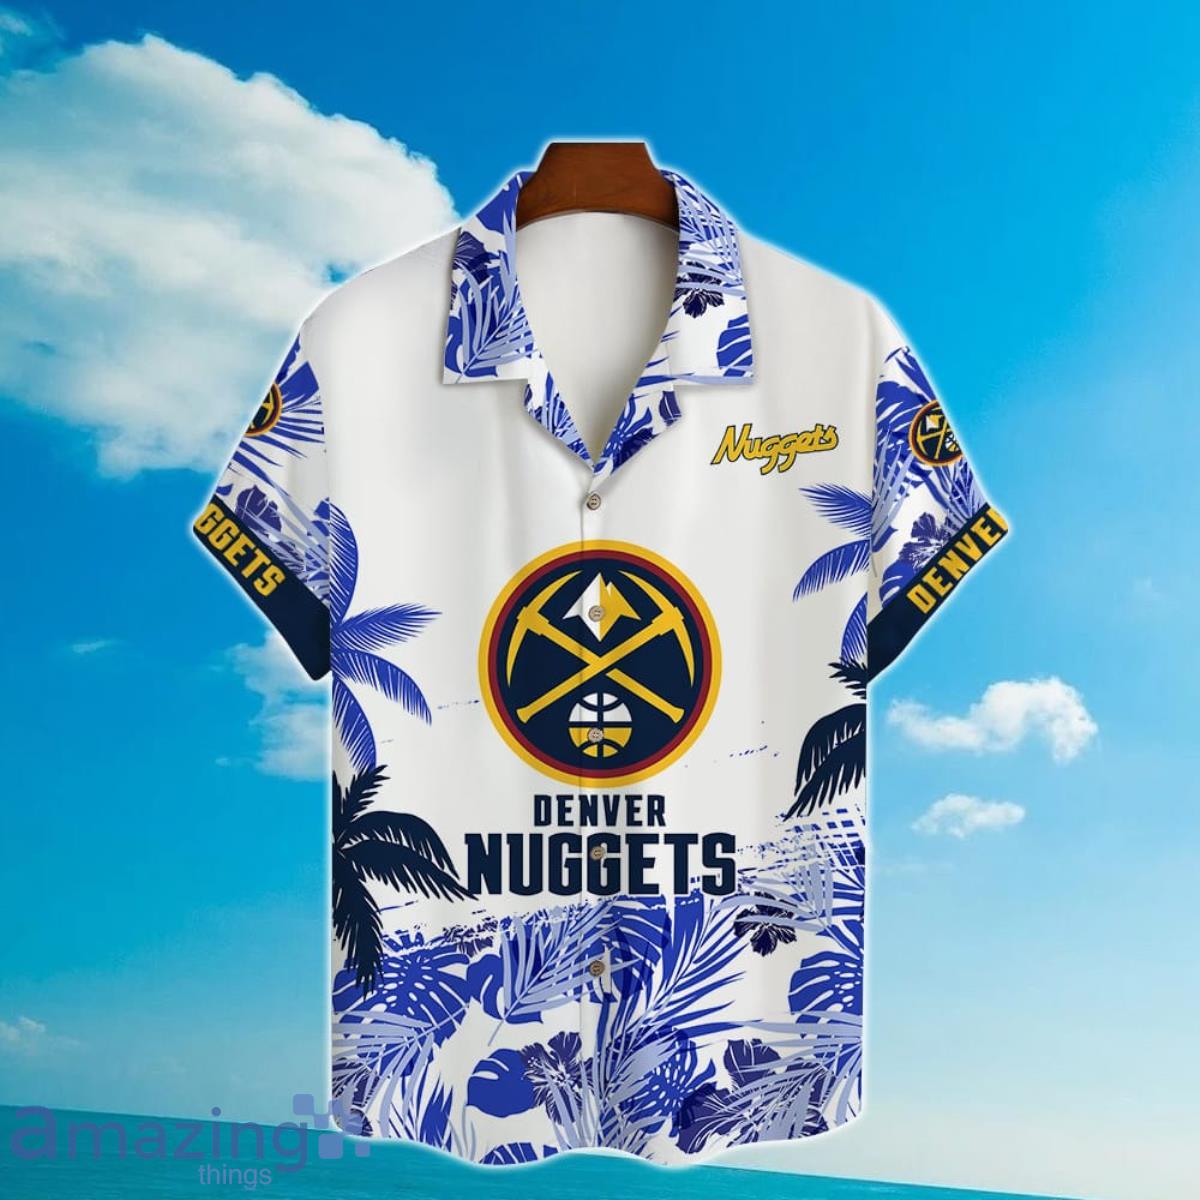 nuggets custom jersey